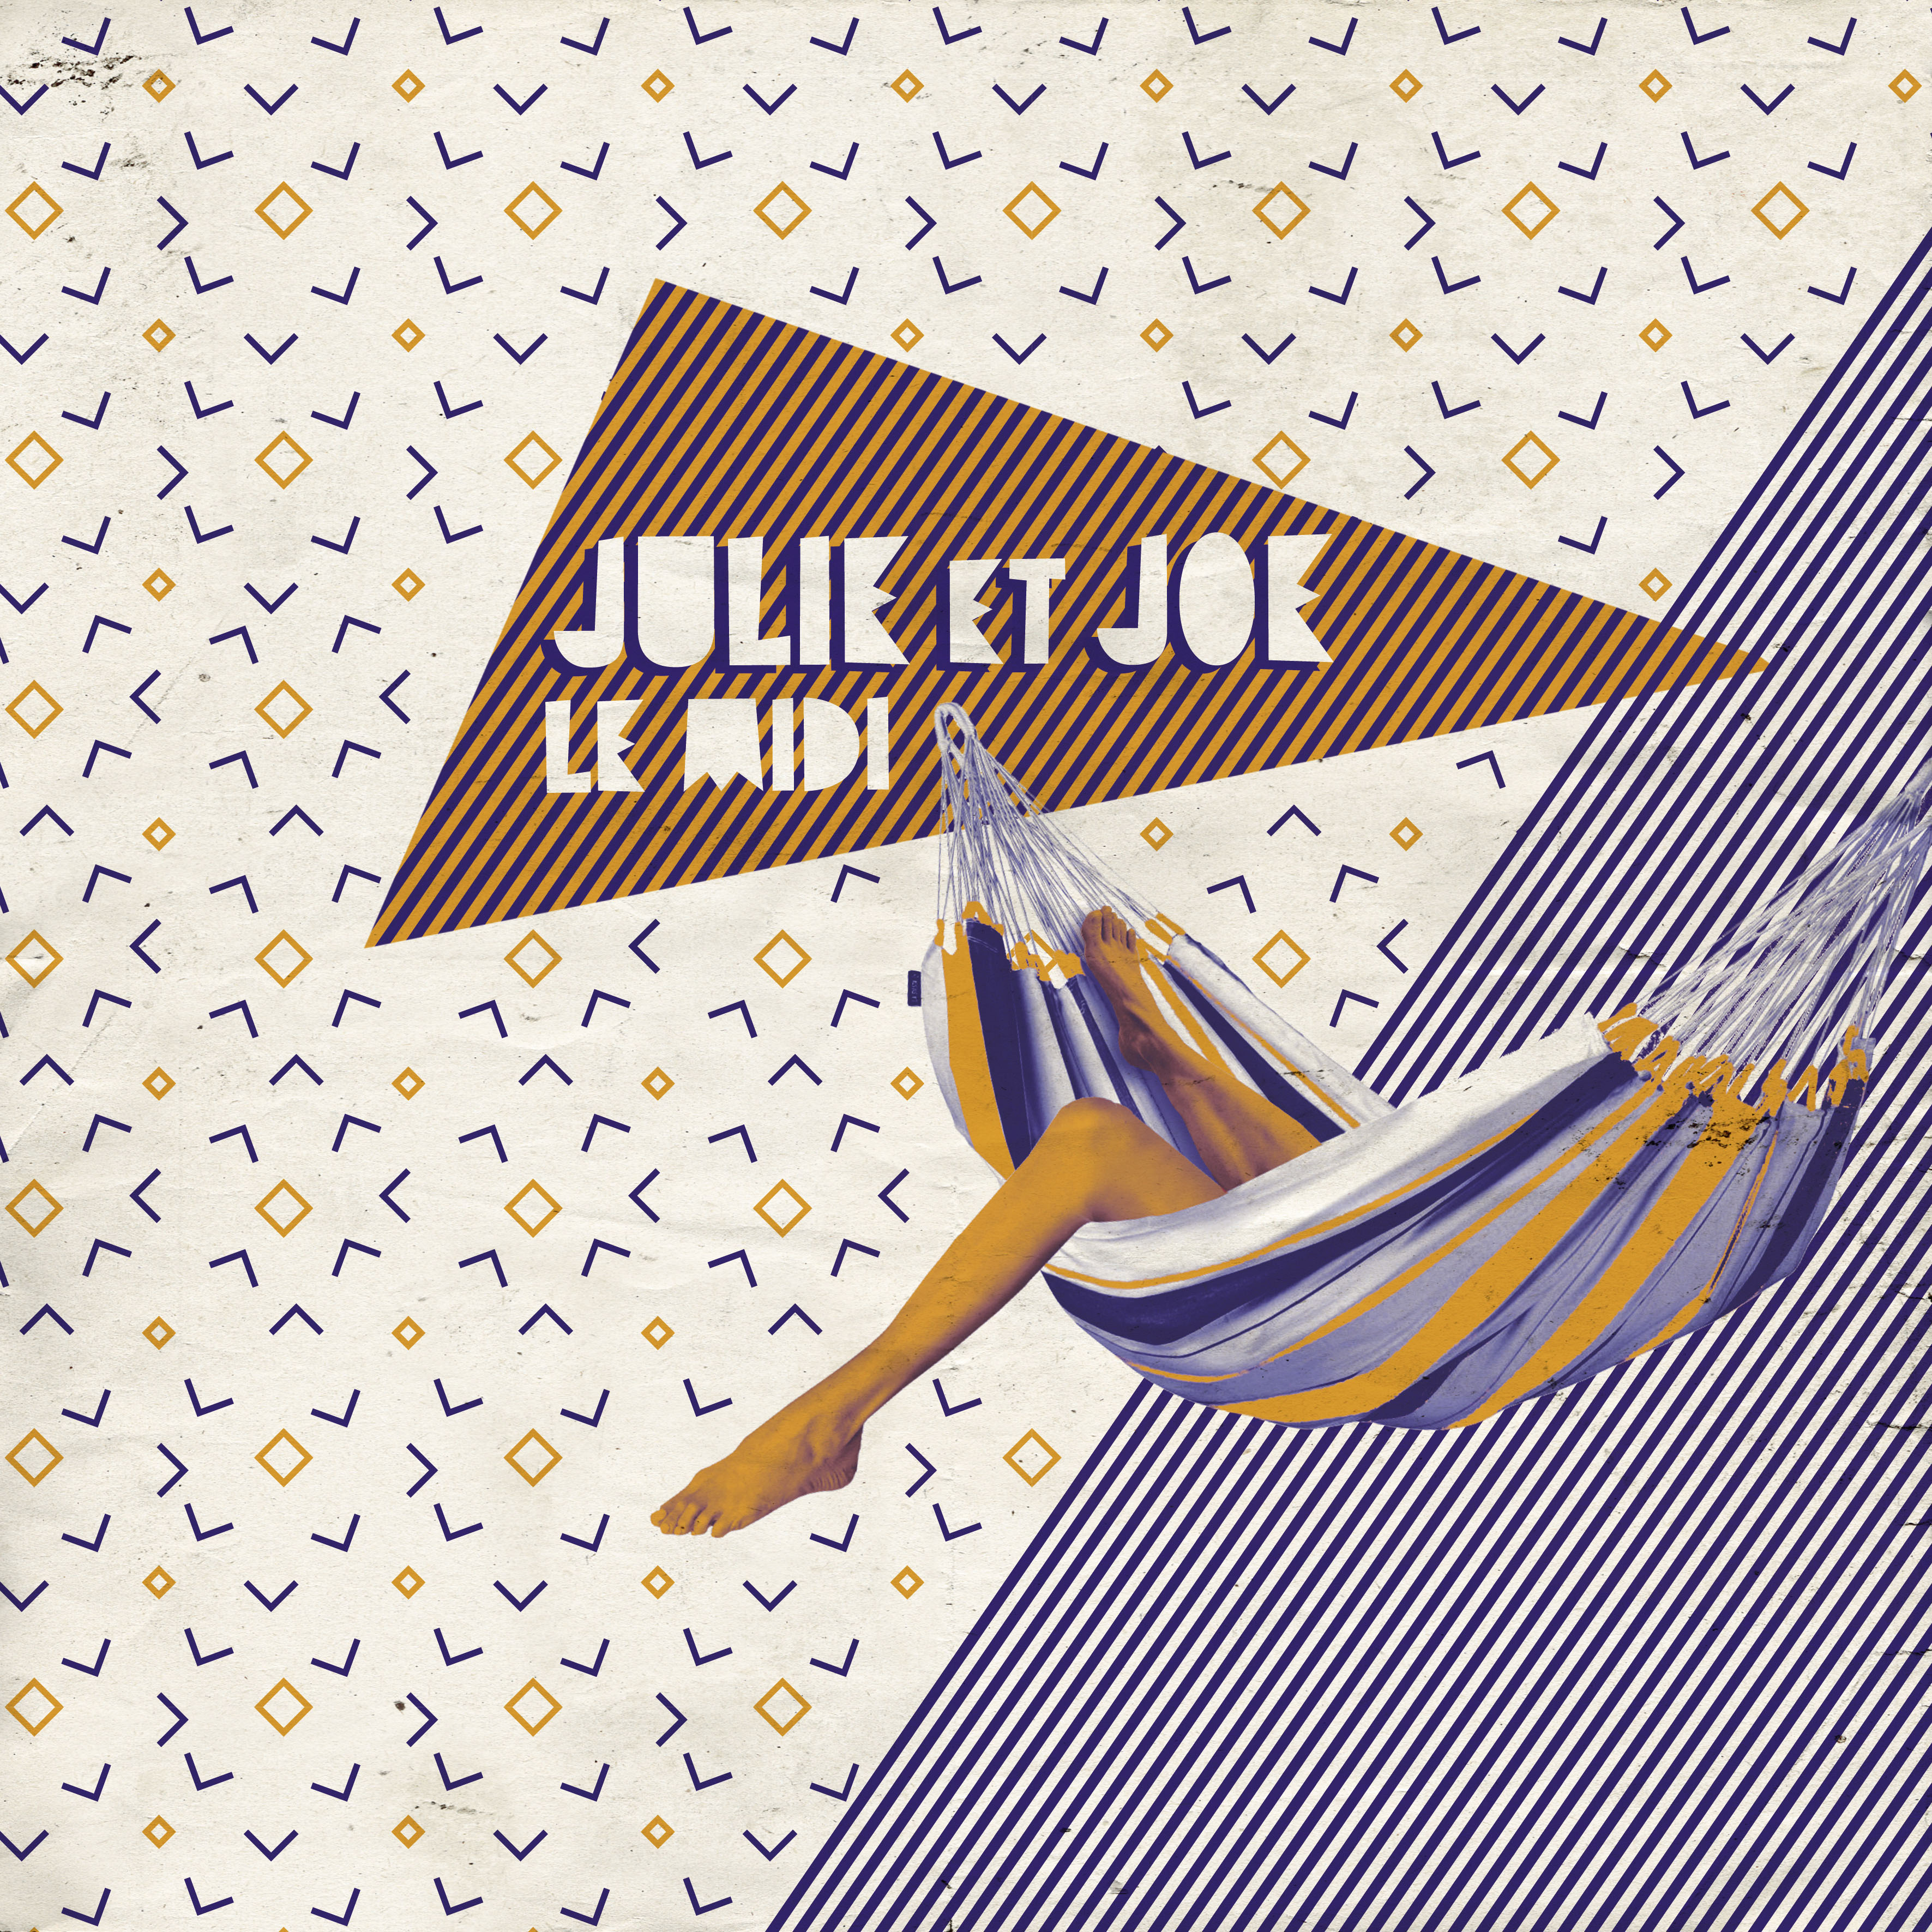 Julie Et Joe "Le Midi" Single Digital